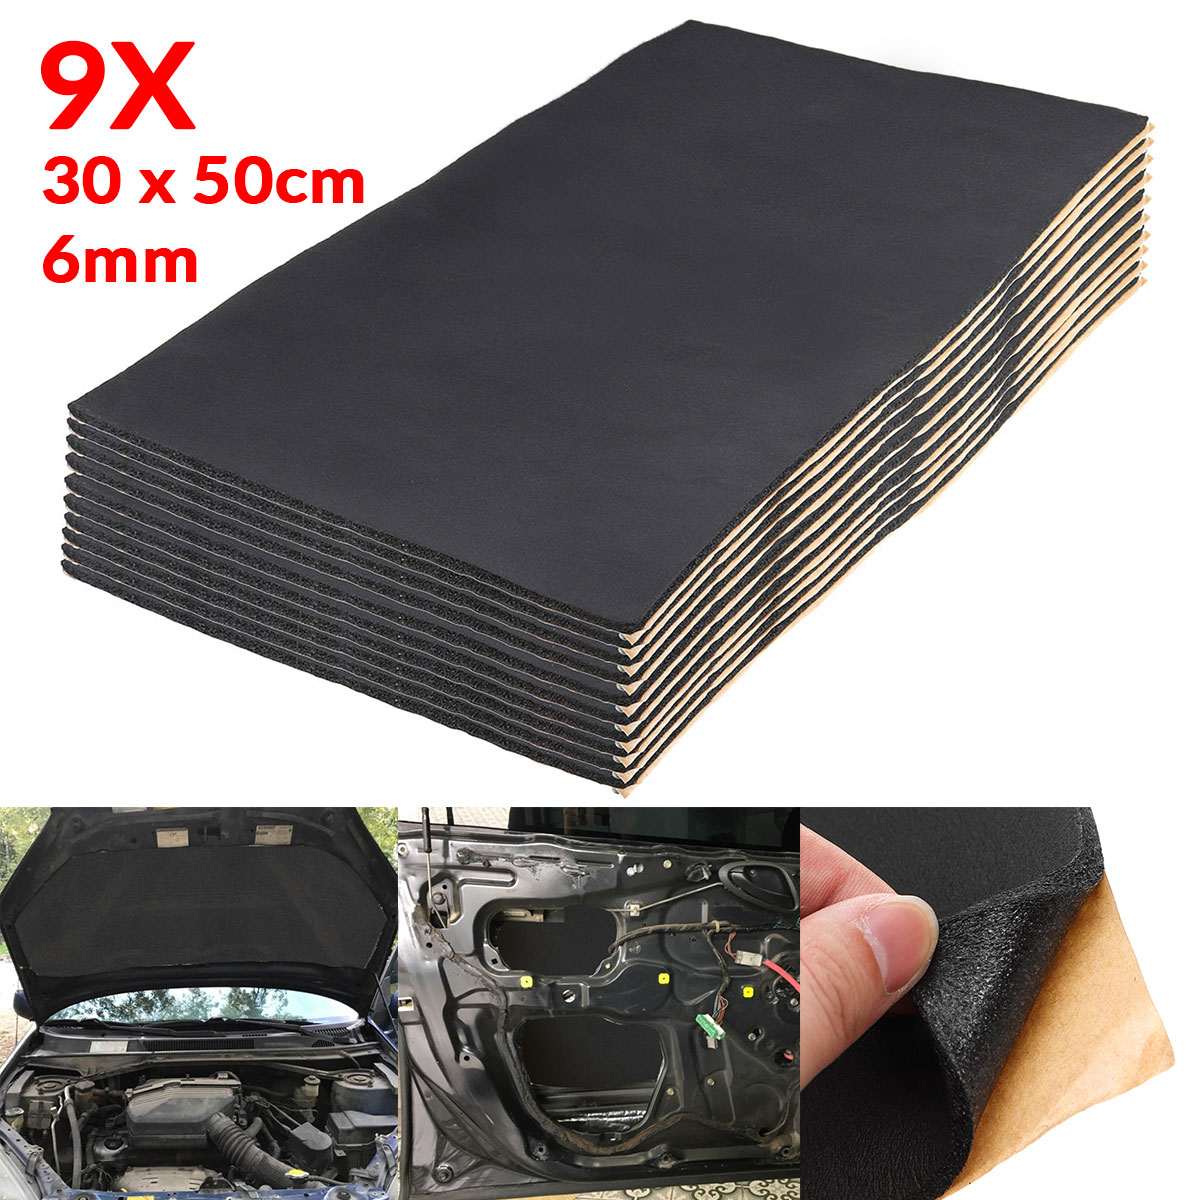 30cm*50cm*6mm 9pcs Car Insulation Mat Van Sound Proofing Deadening Foam Protector